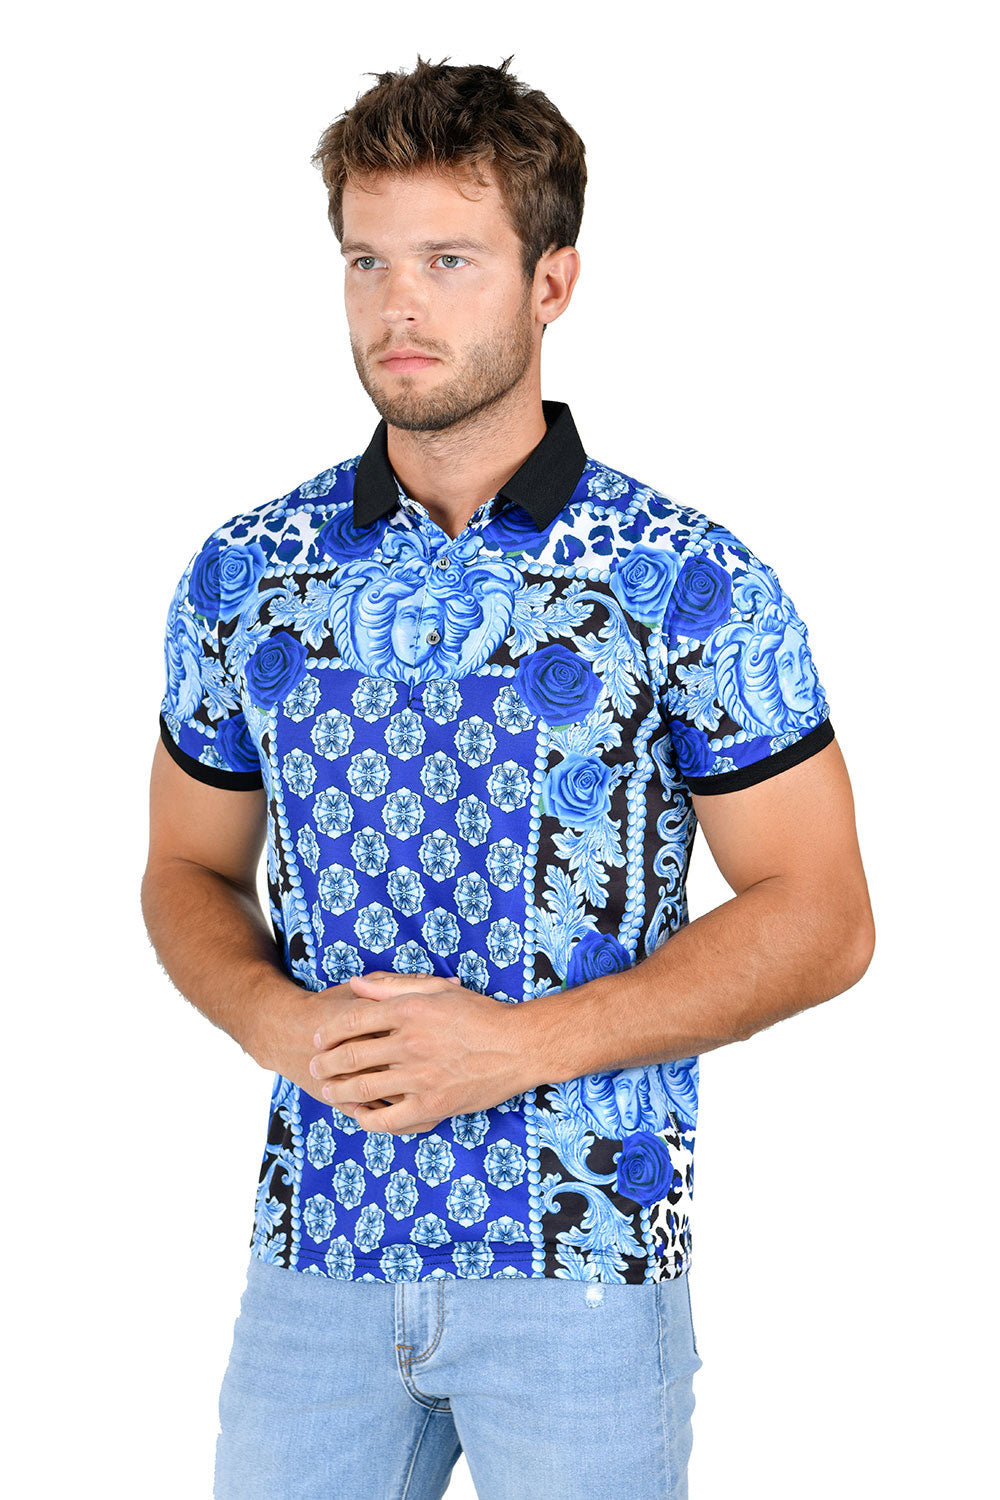 Barabas Men's Medusa Floral Rose Short Sleeve Polo Shirt PSP2015 Blue